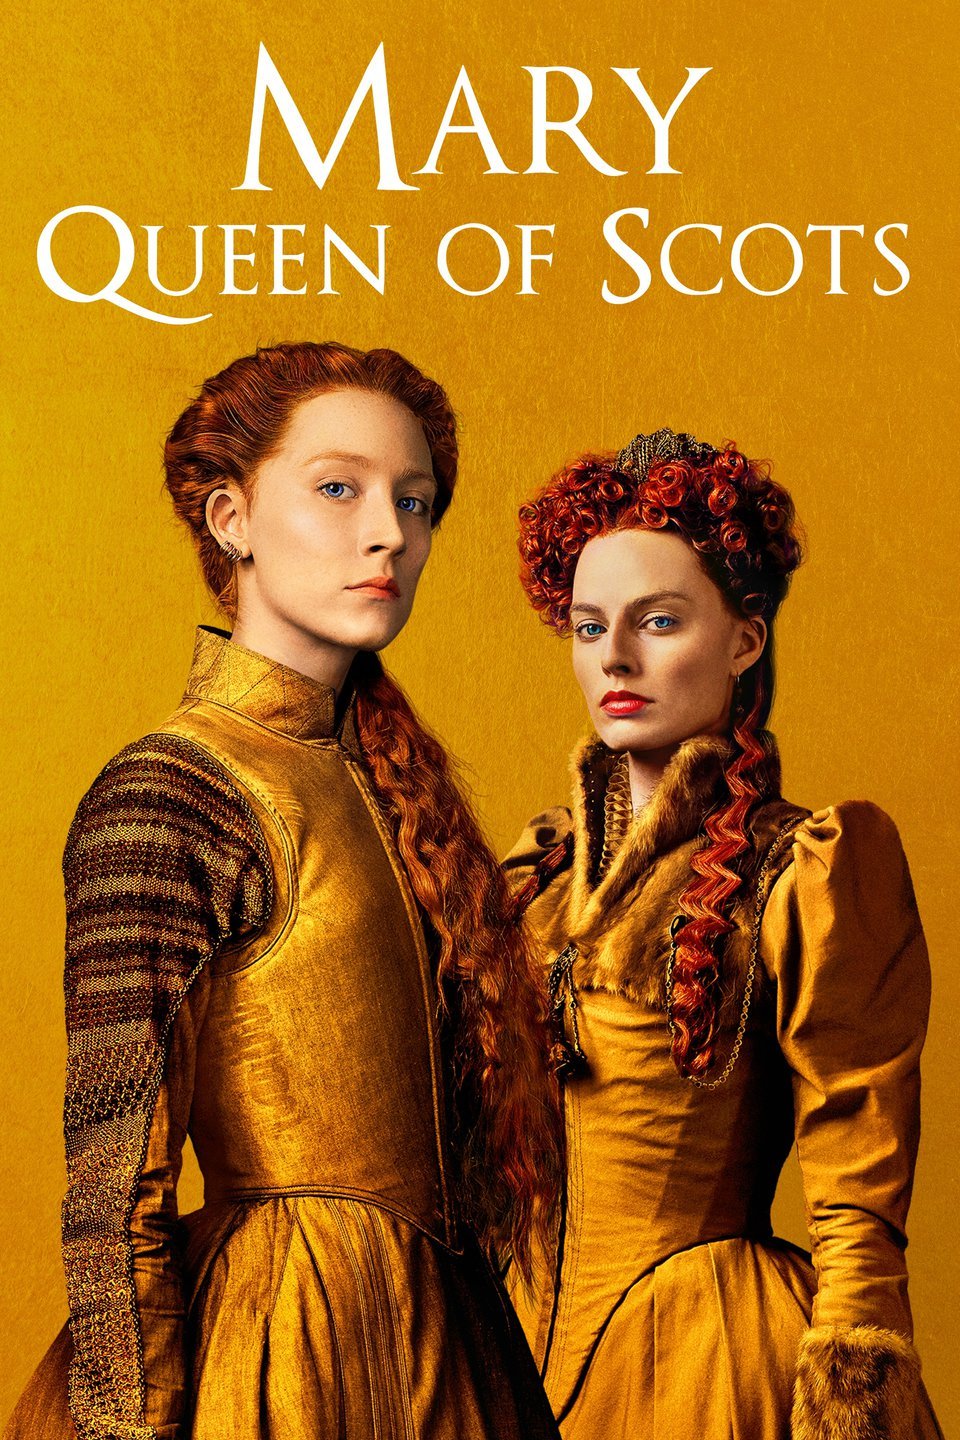 [MINI Super-HQ] Mary Queen of Scots (2018) แมรี่ ราชินีแห่งสกอตส์ [1080p] [พากย์อังกฤษ DTS] [Soundtrack บรรยายไทย + อังกฤษ] [เสียงอังกฤษ + ซับไทย] [OPENLOAD]